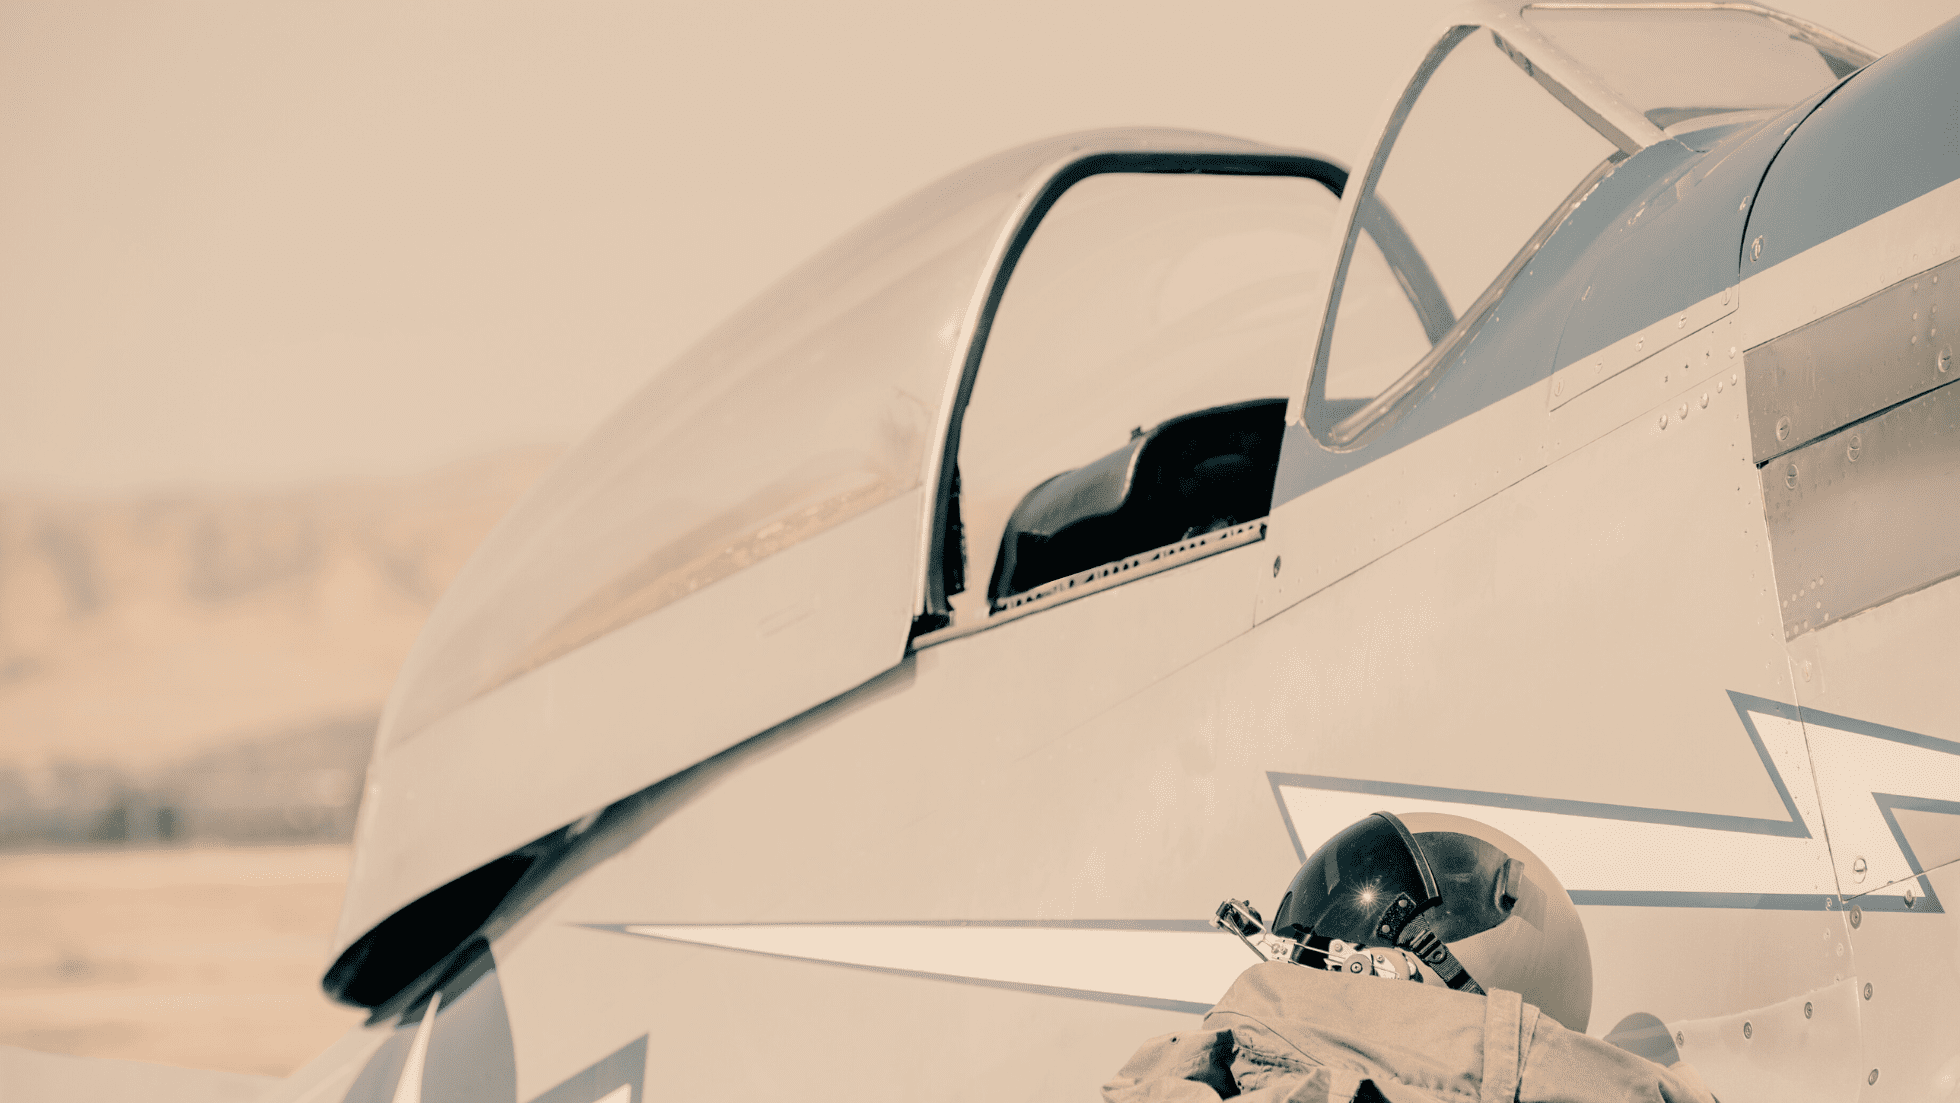 Howard Hughes - More Than Just an Aviator